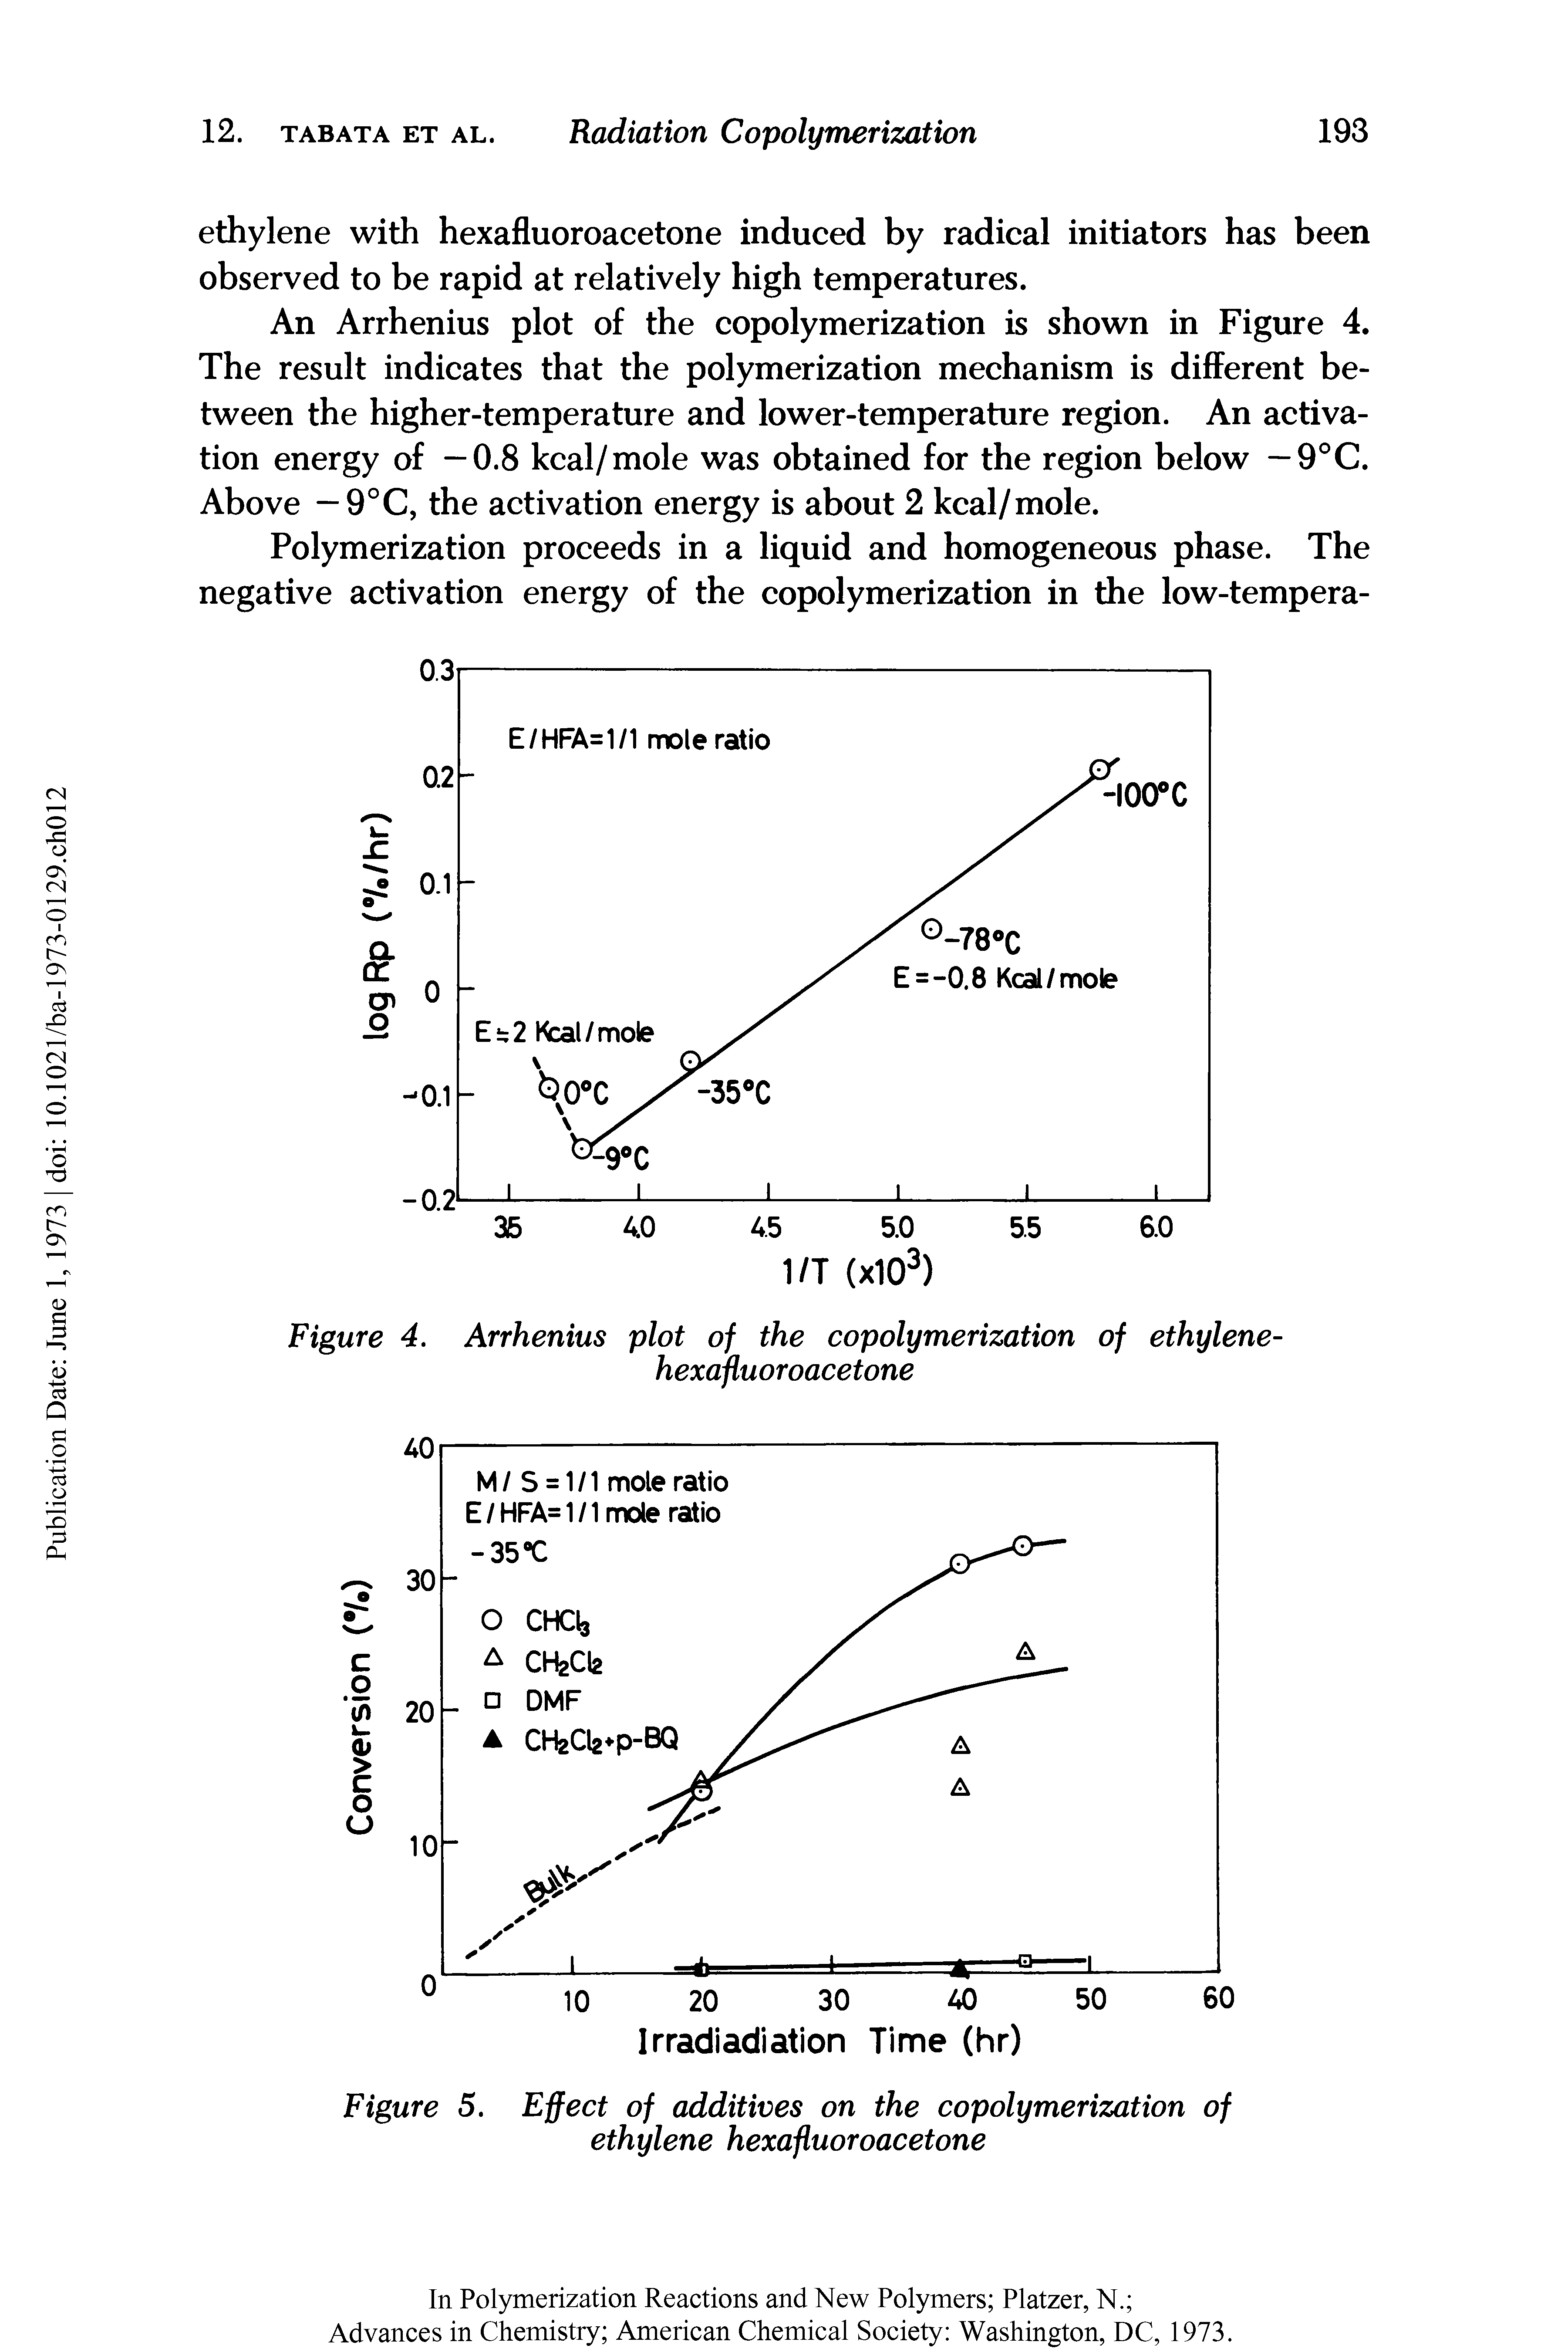 Figure 4. Arrhenius plot of the copolymerization of ethylene-hexafluoroacetone...